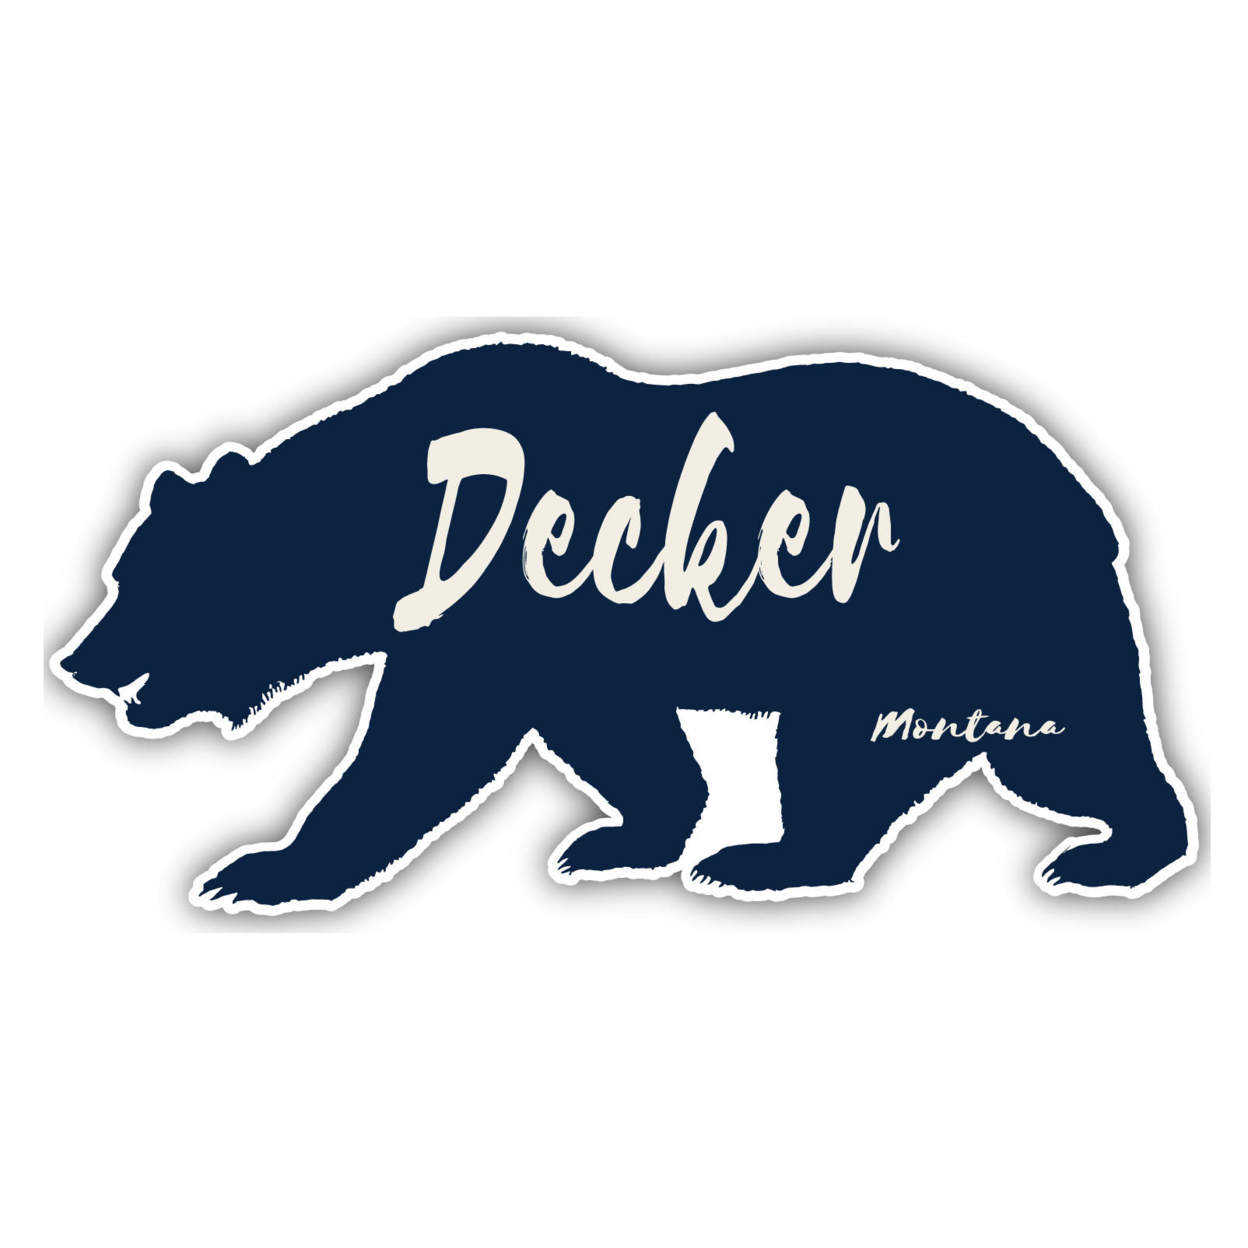 Decker Montana Souvenir Decorative Stickers (Choose Theme And Size) - Single Unit, 8-Inch, Bear